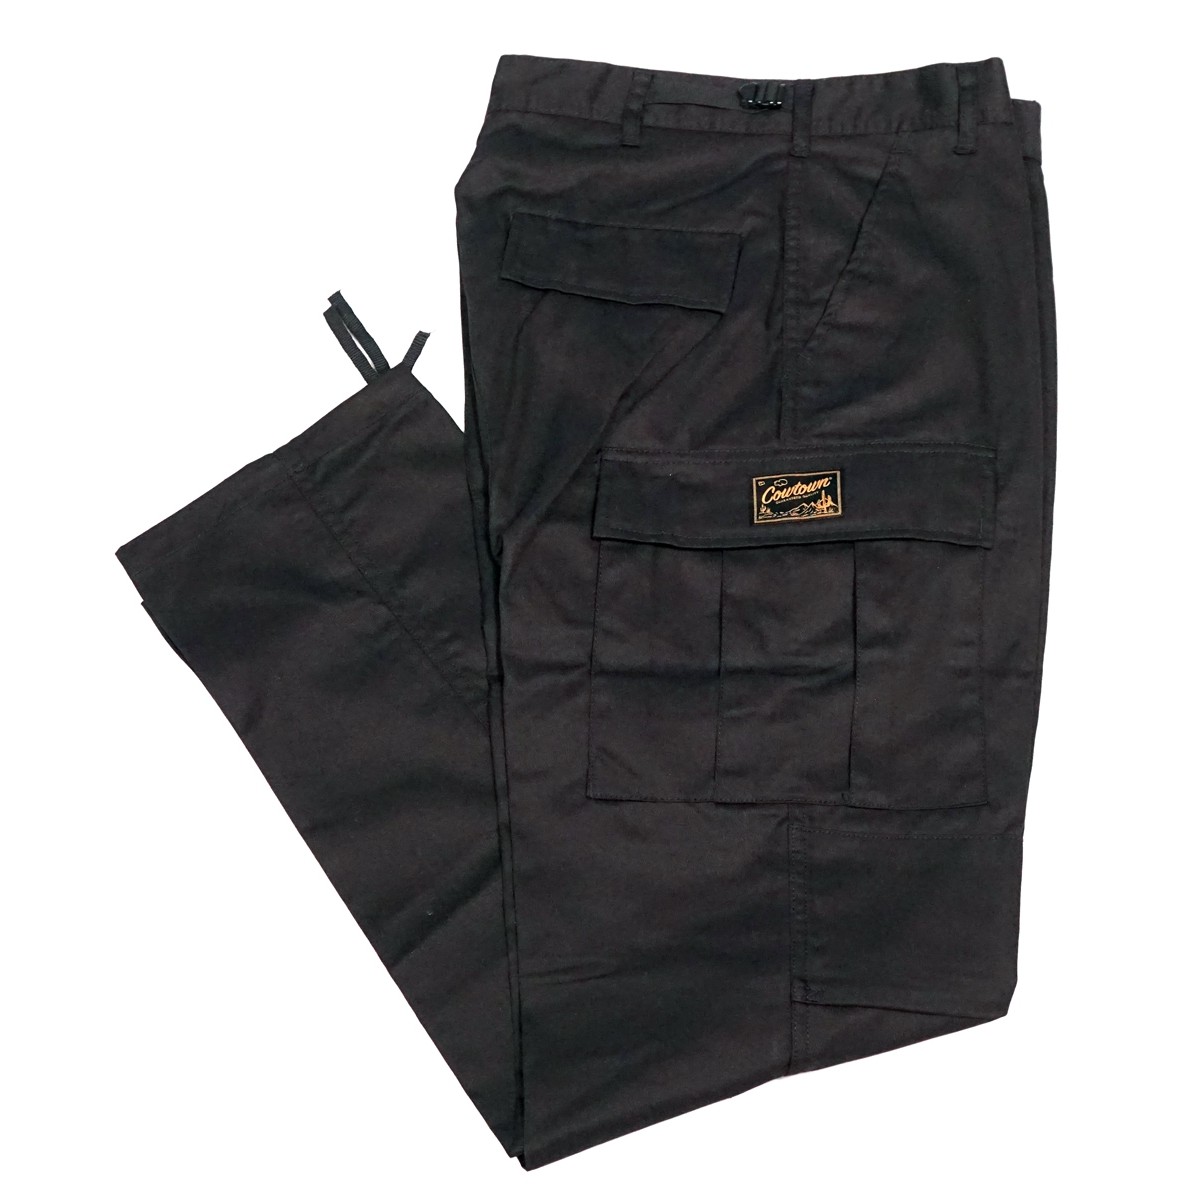 Guaranteed Quality Cargo Pants (Black)